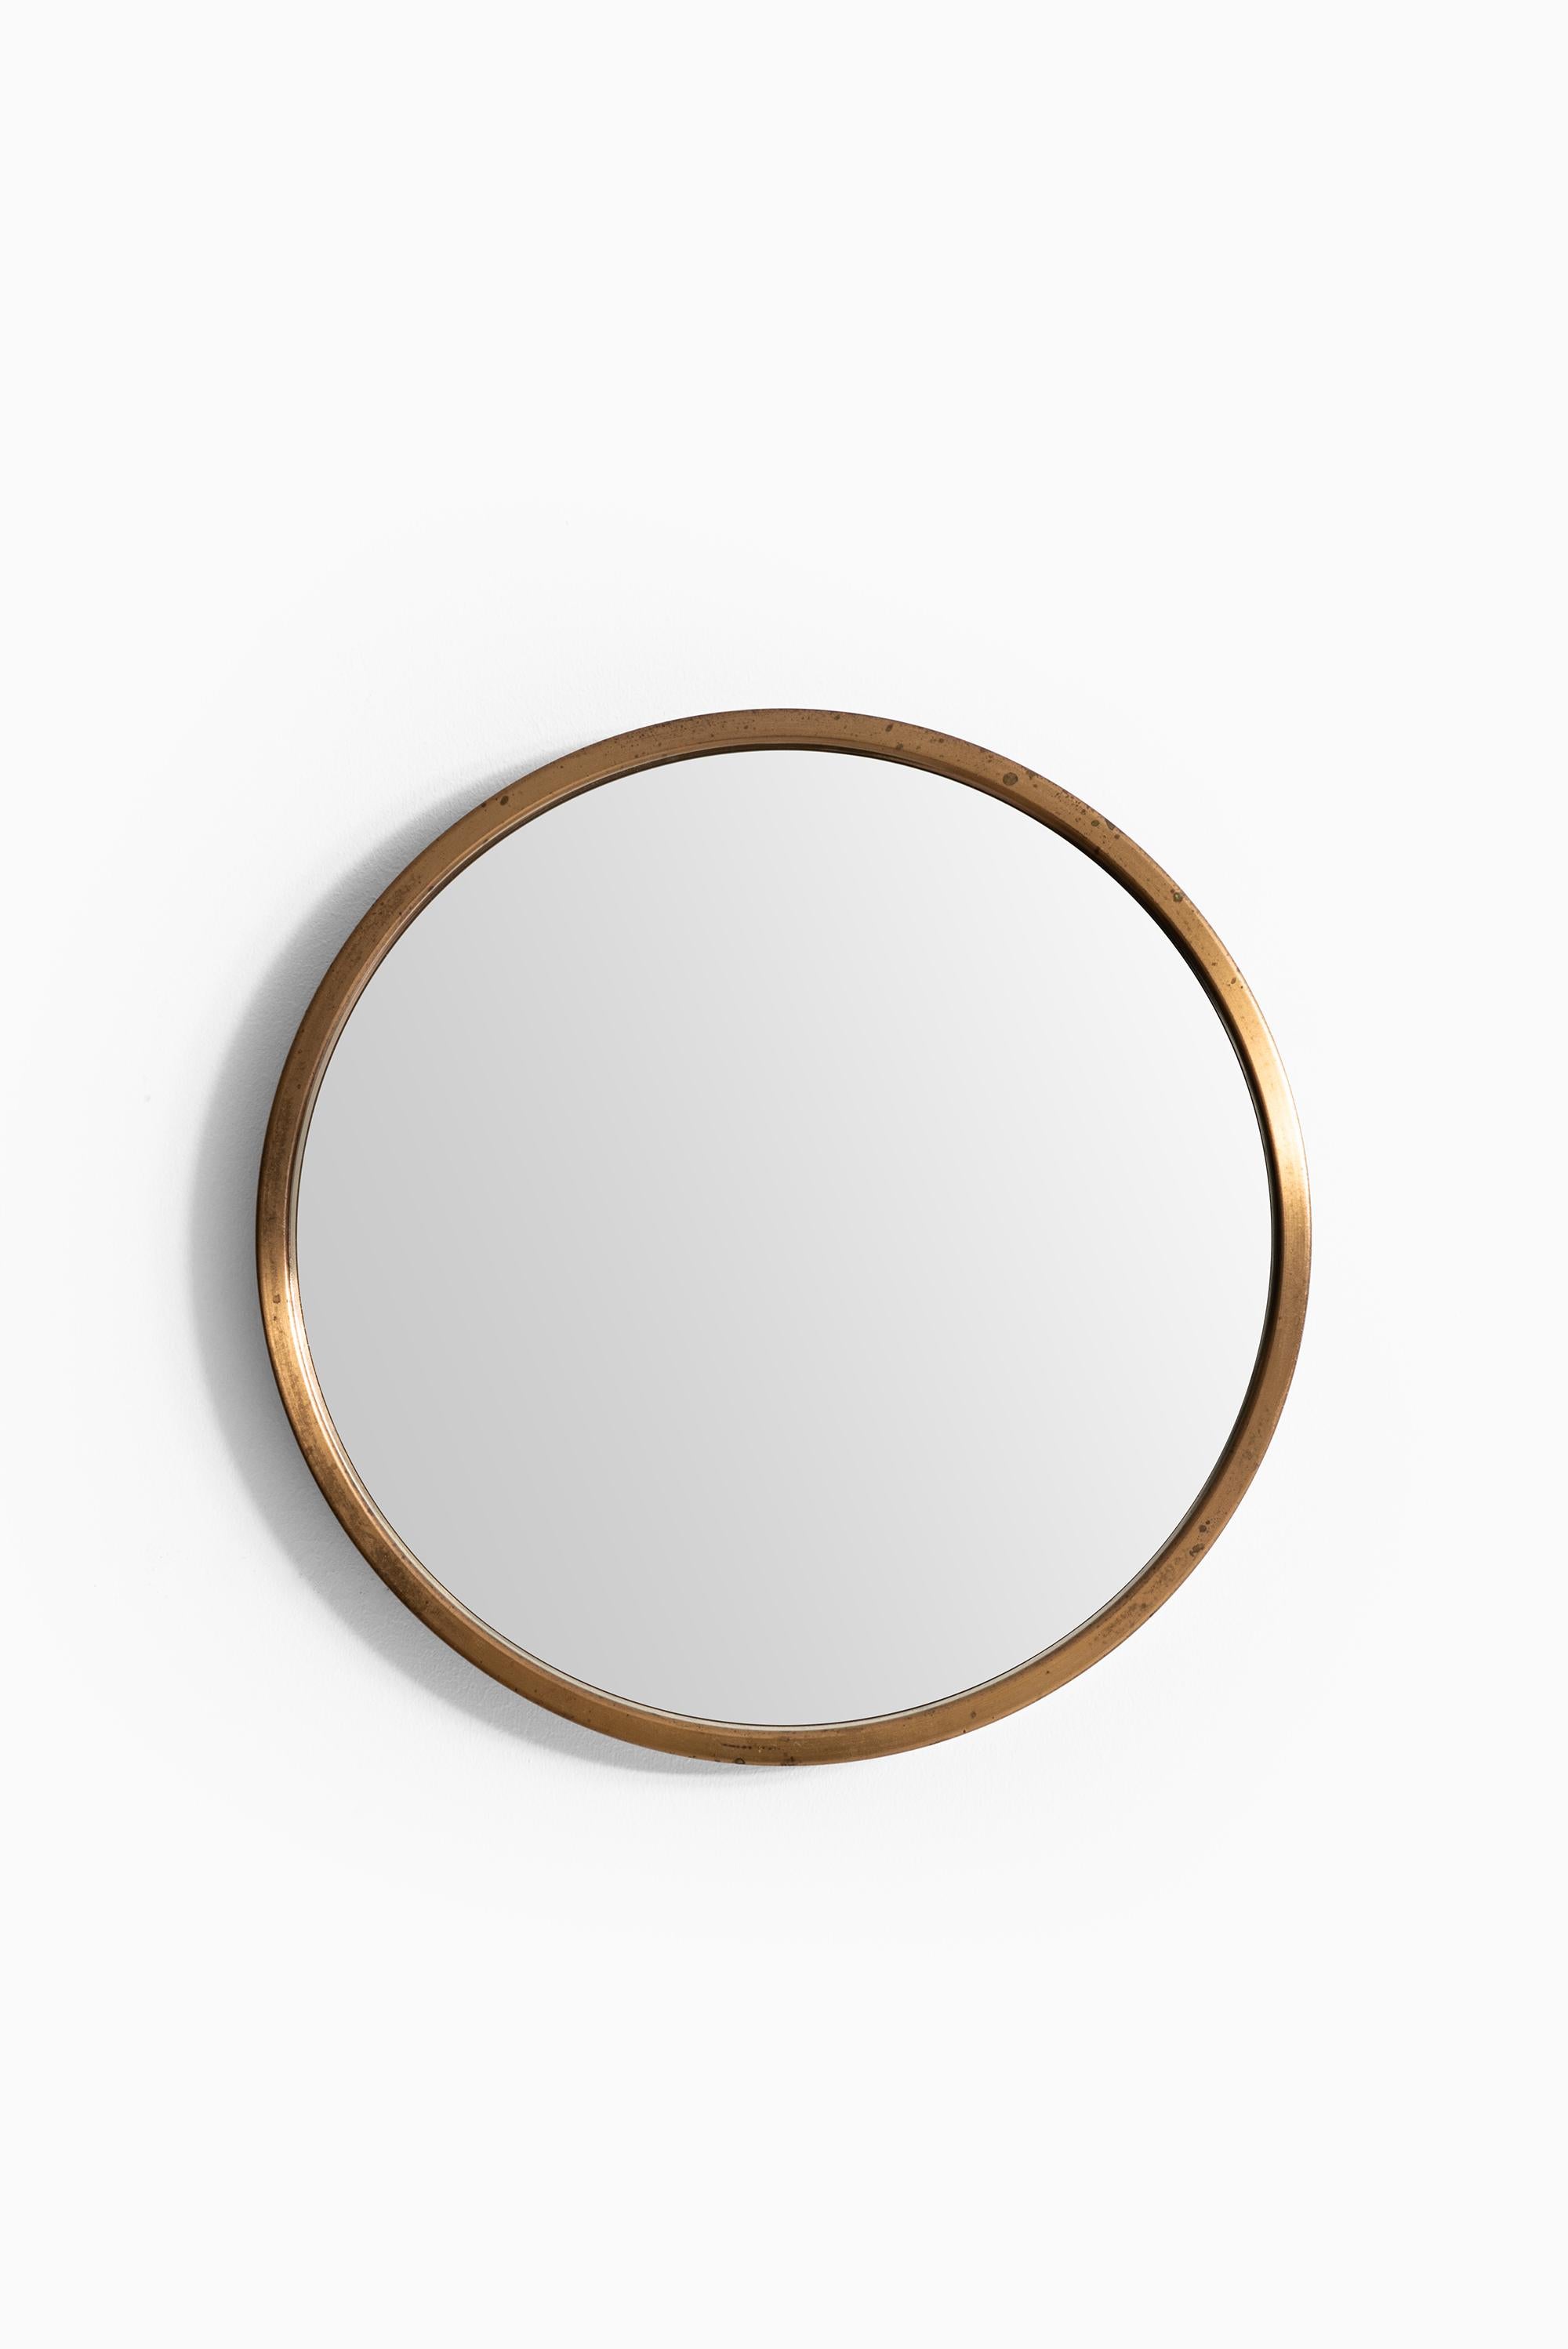 Round mirror in brass model nr 131. Produced by Glasmäster in Markaryd, Sweden.